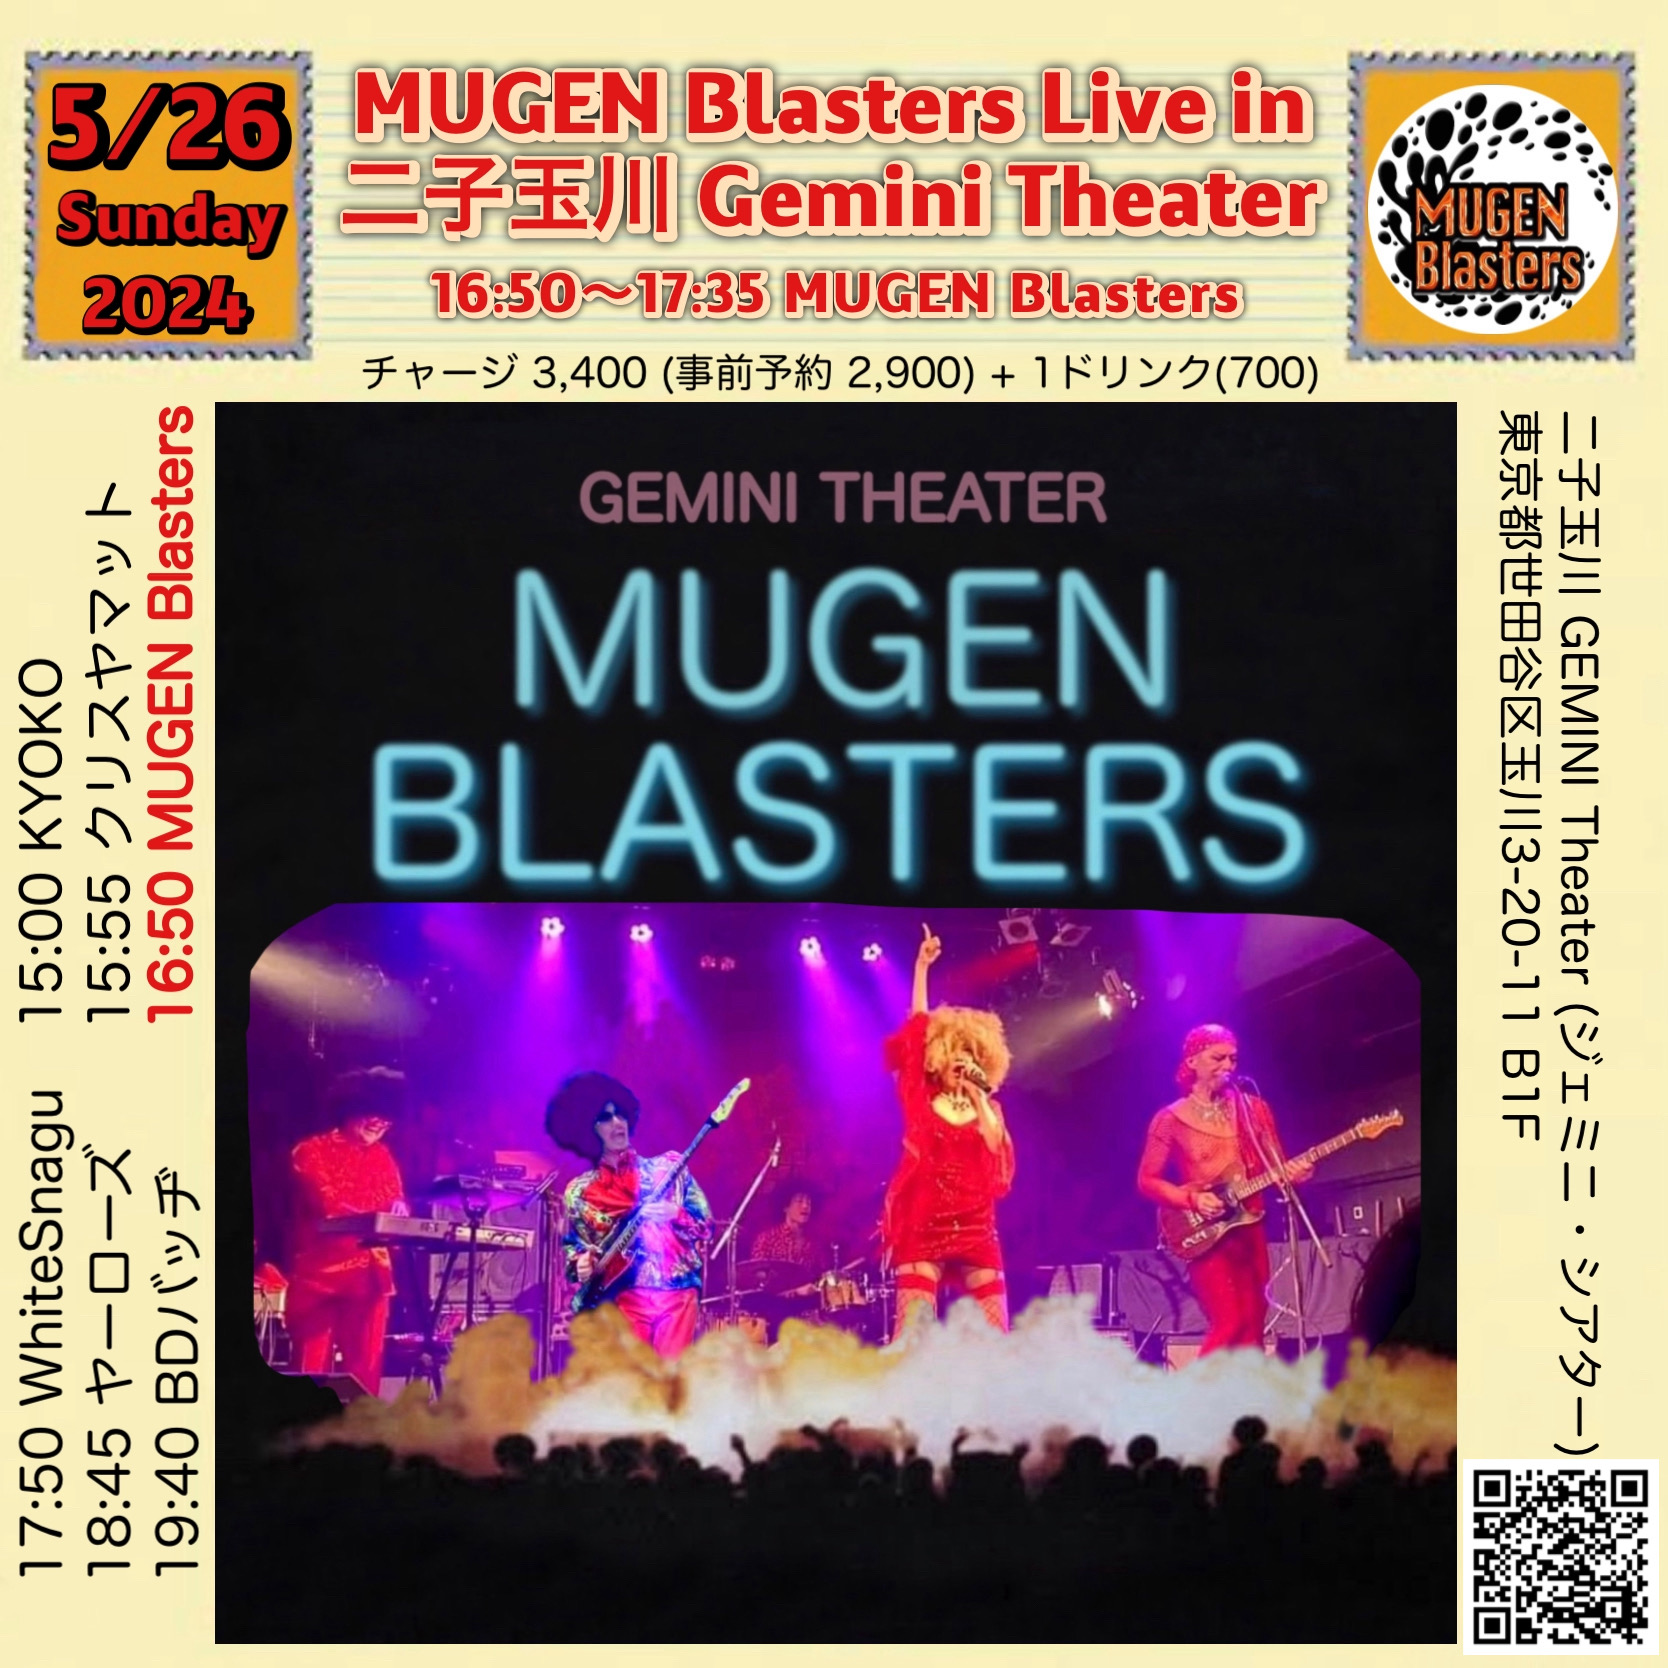 MUGEN Blasters Live in Gemini Theater